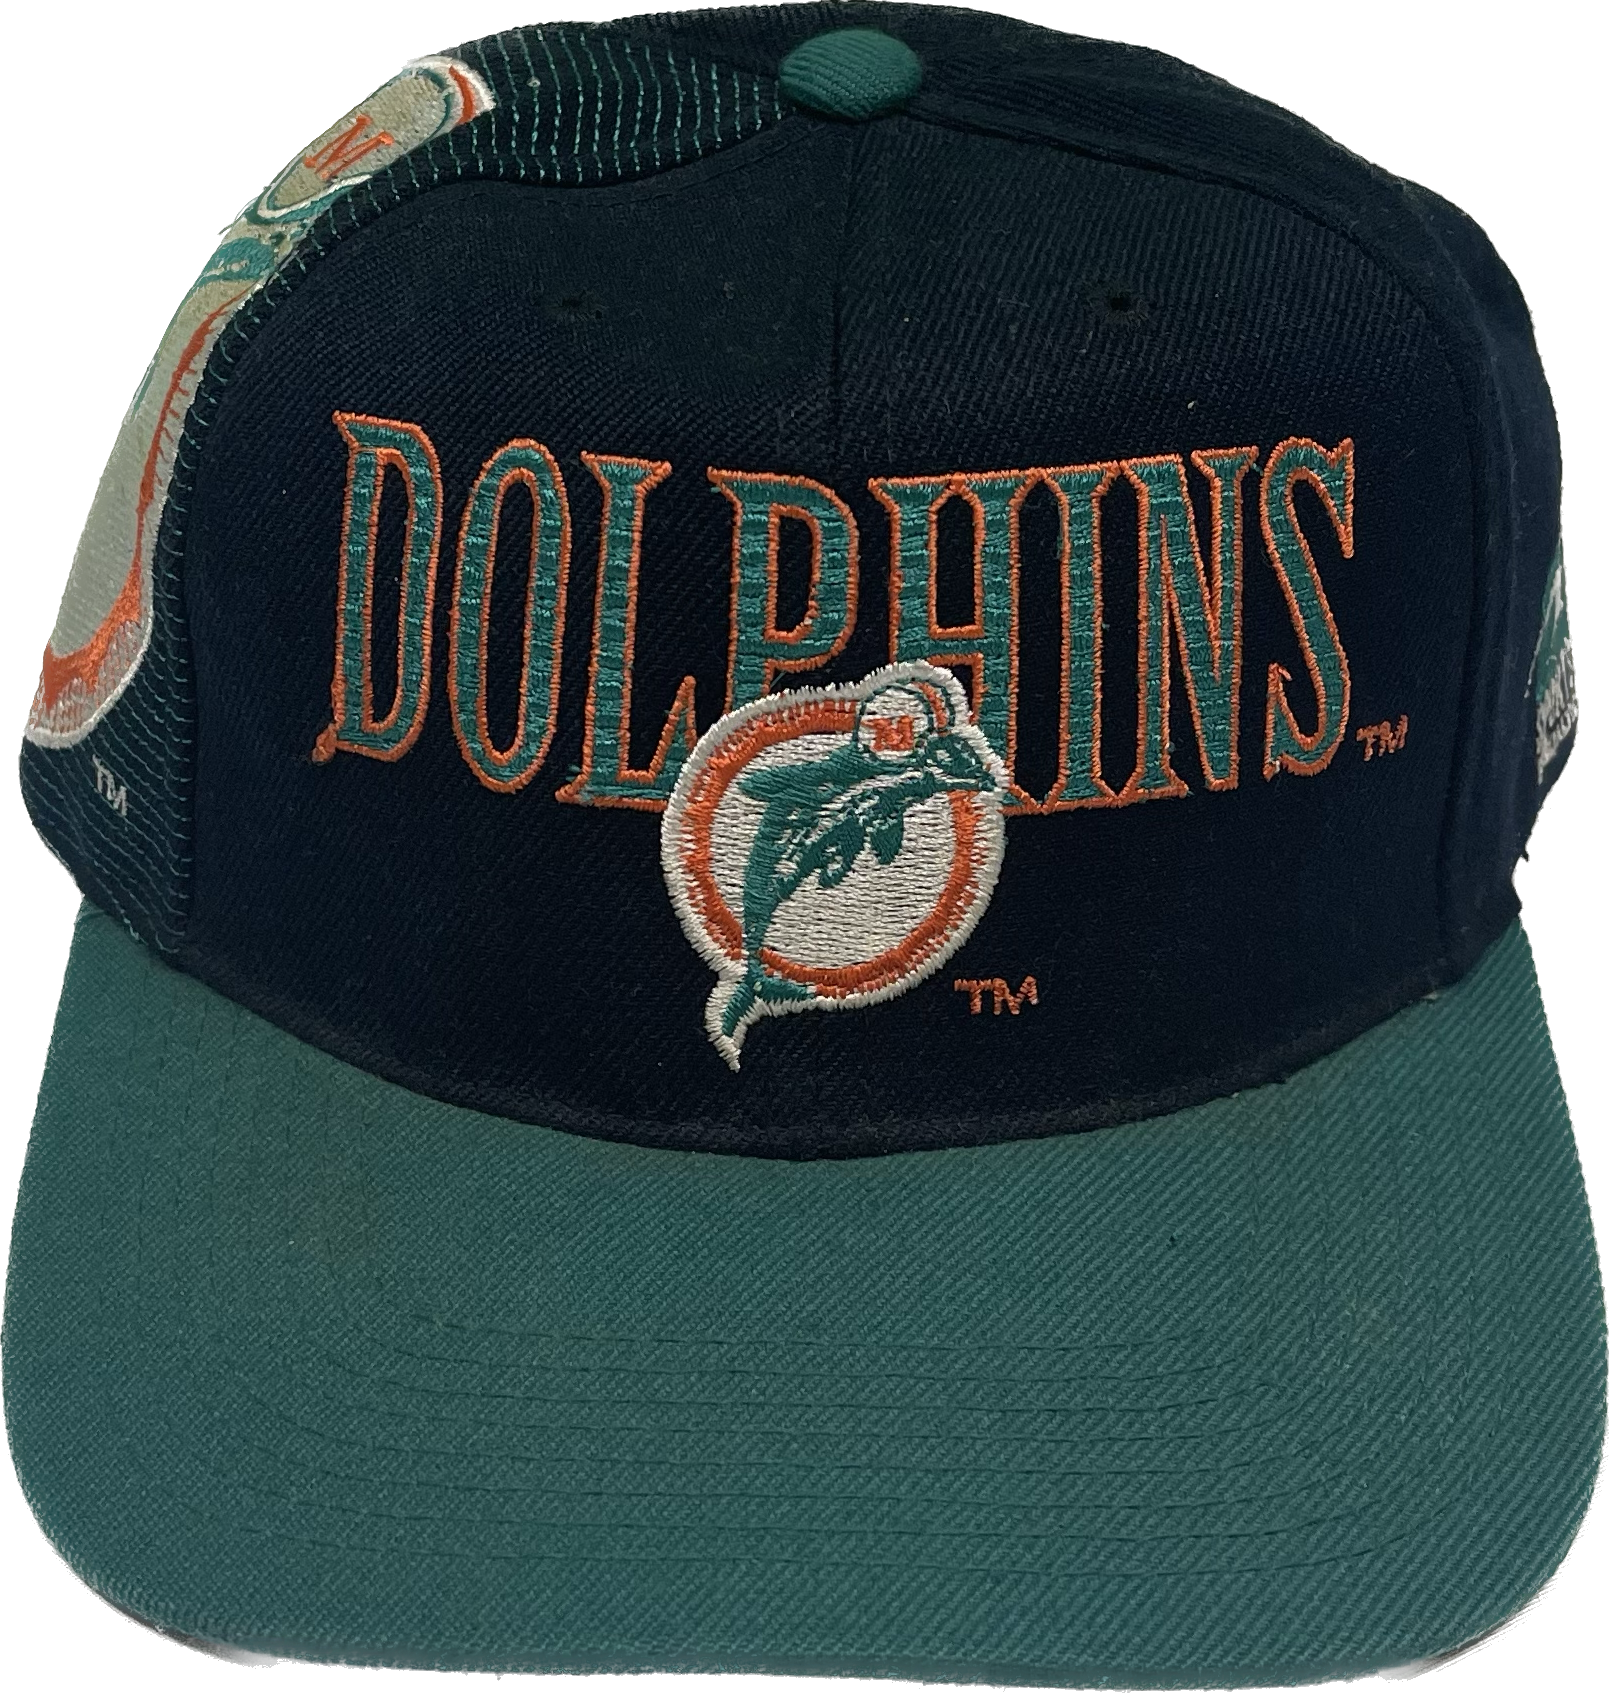 Miami Dolphins Vintage Hat